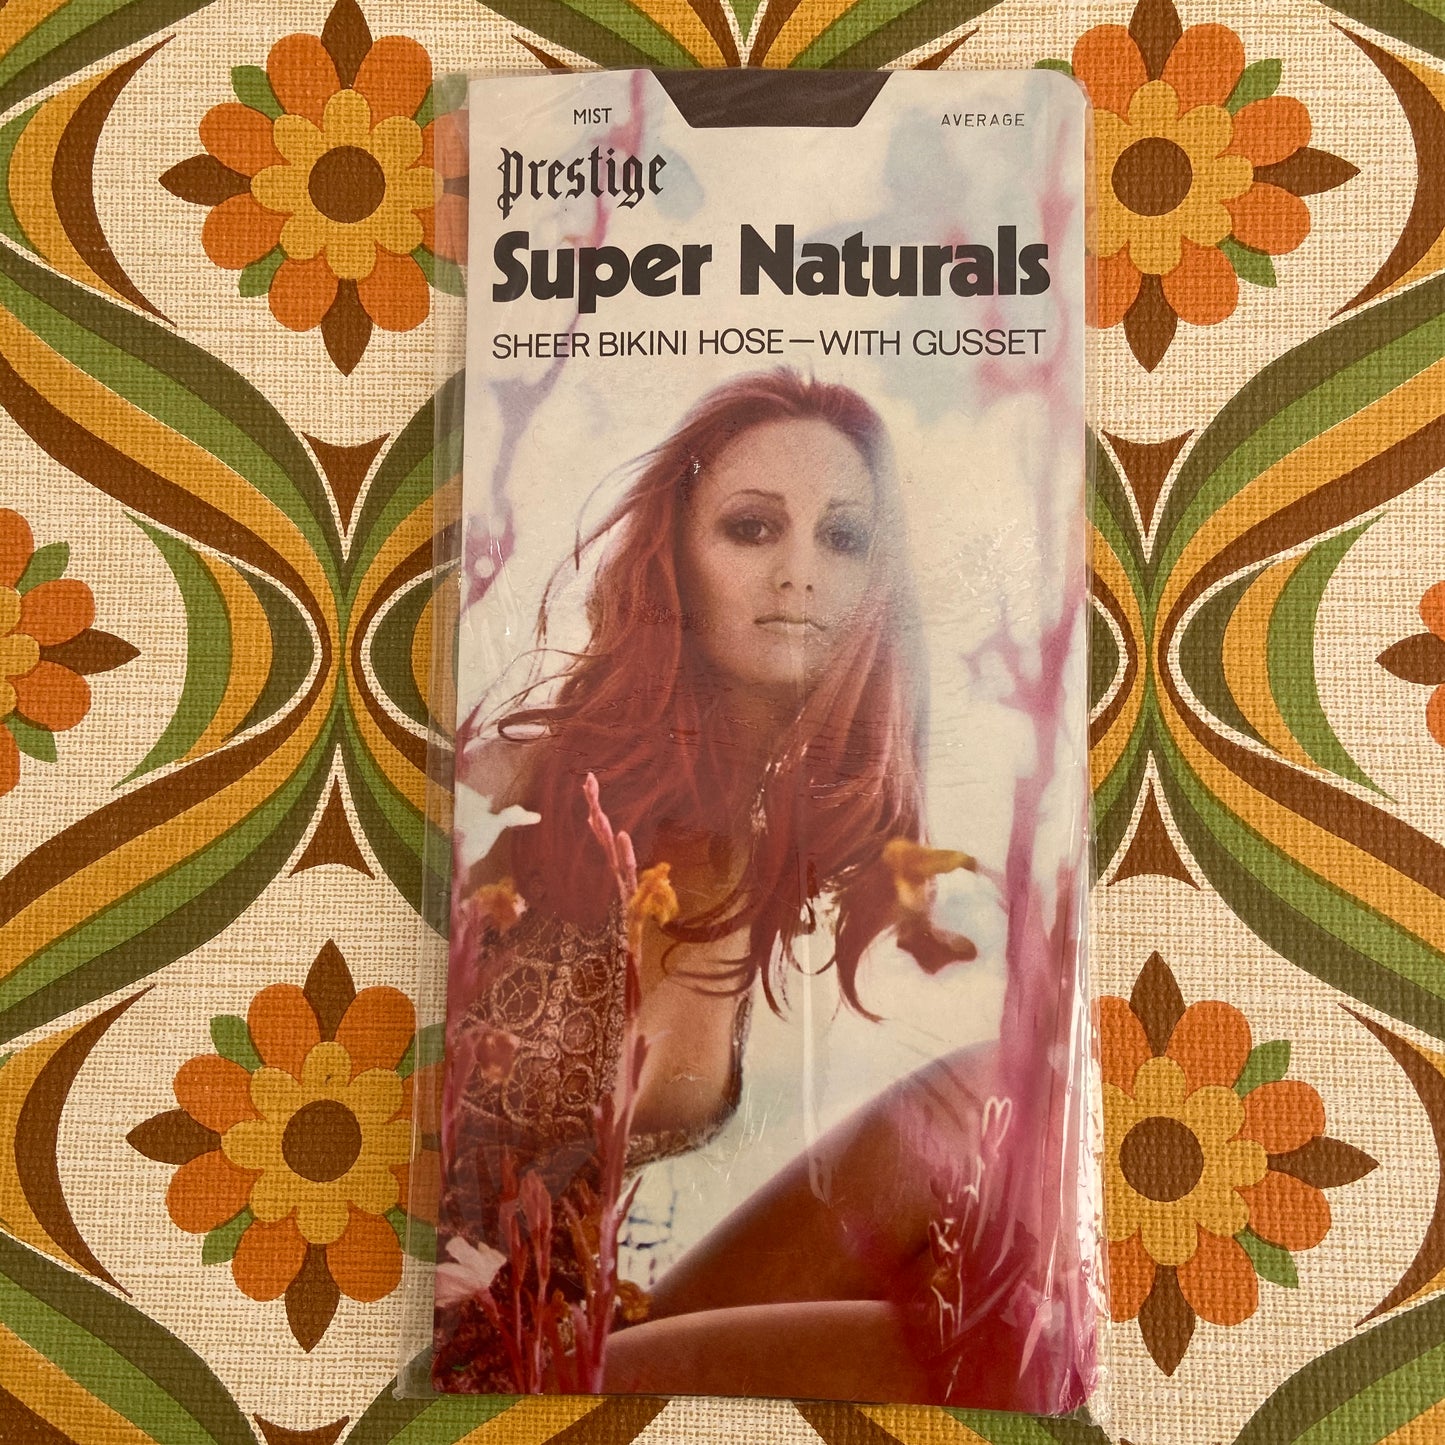 SUPER NATURALS Prestige Sheer BIKINI HOSE with GUSSET RETRO Packaging